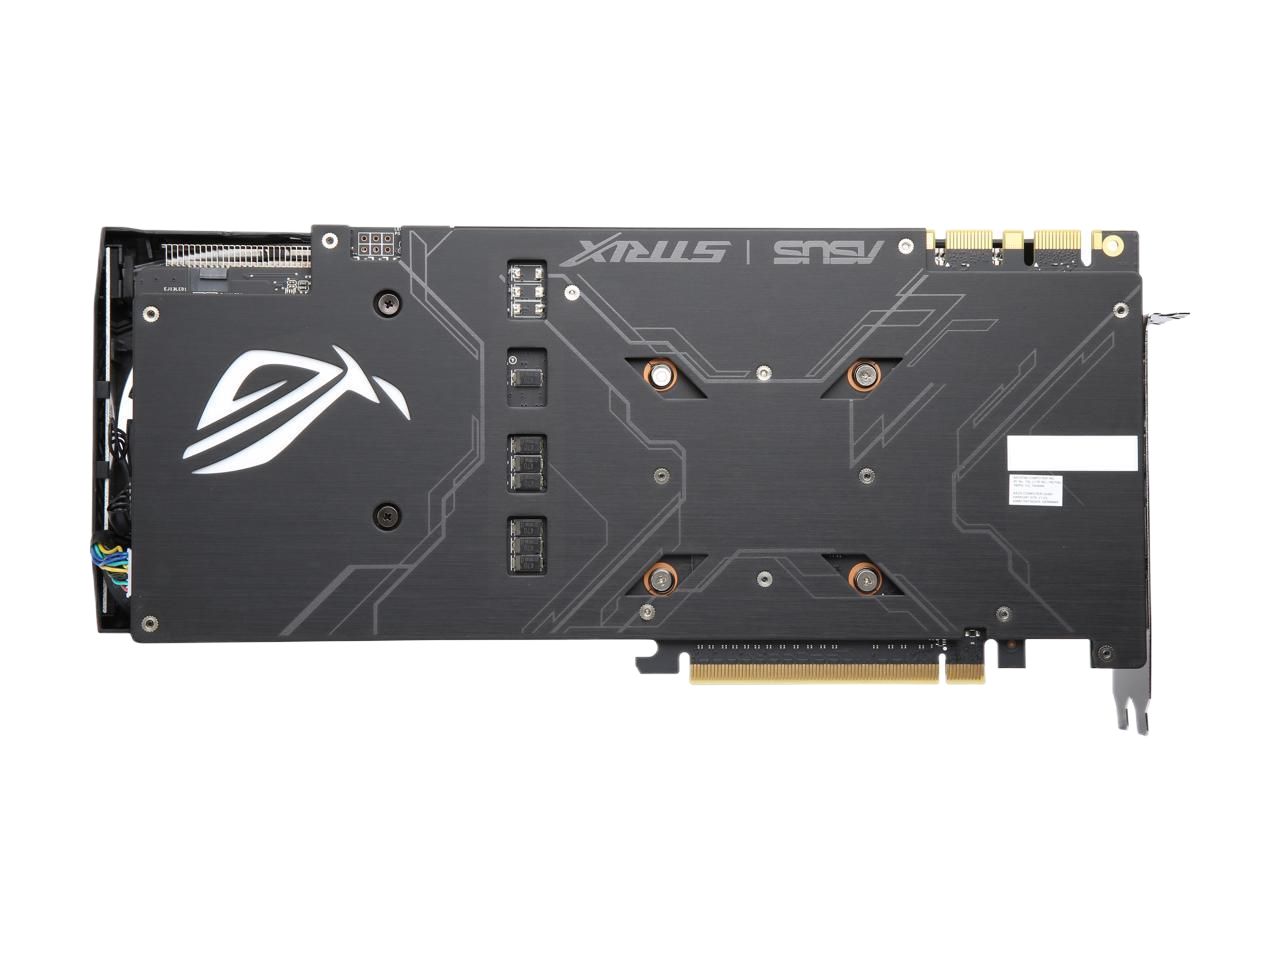 ASUS ROG GeForce GTX 1080 8GB GDDR5X PCI Express 3.0 Video Card STRIX-GTX1080-A8G-GAMING